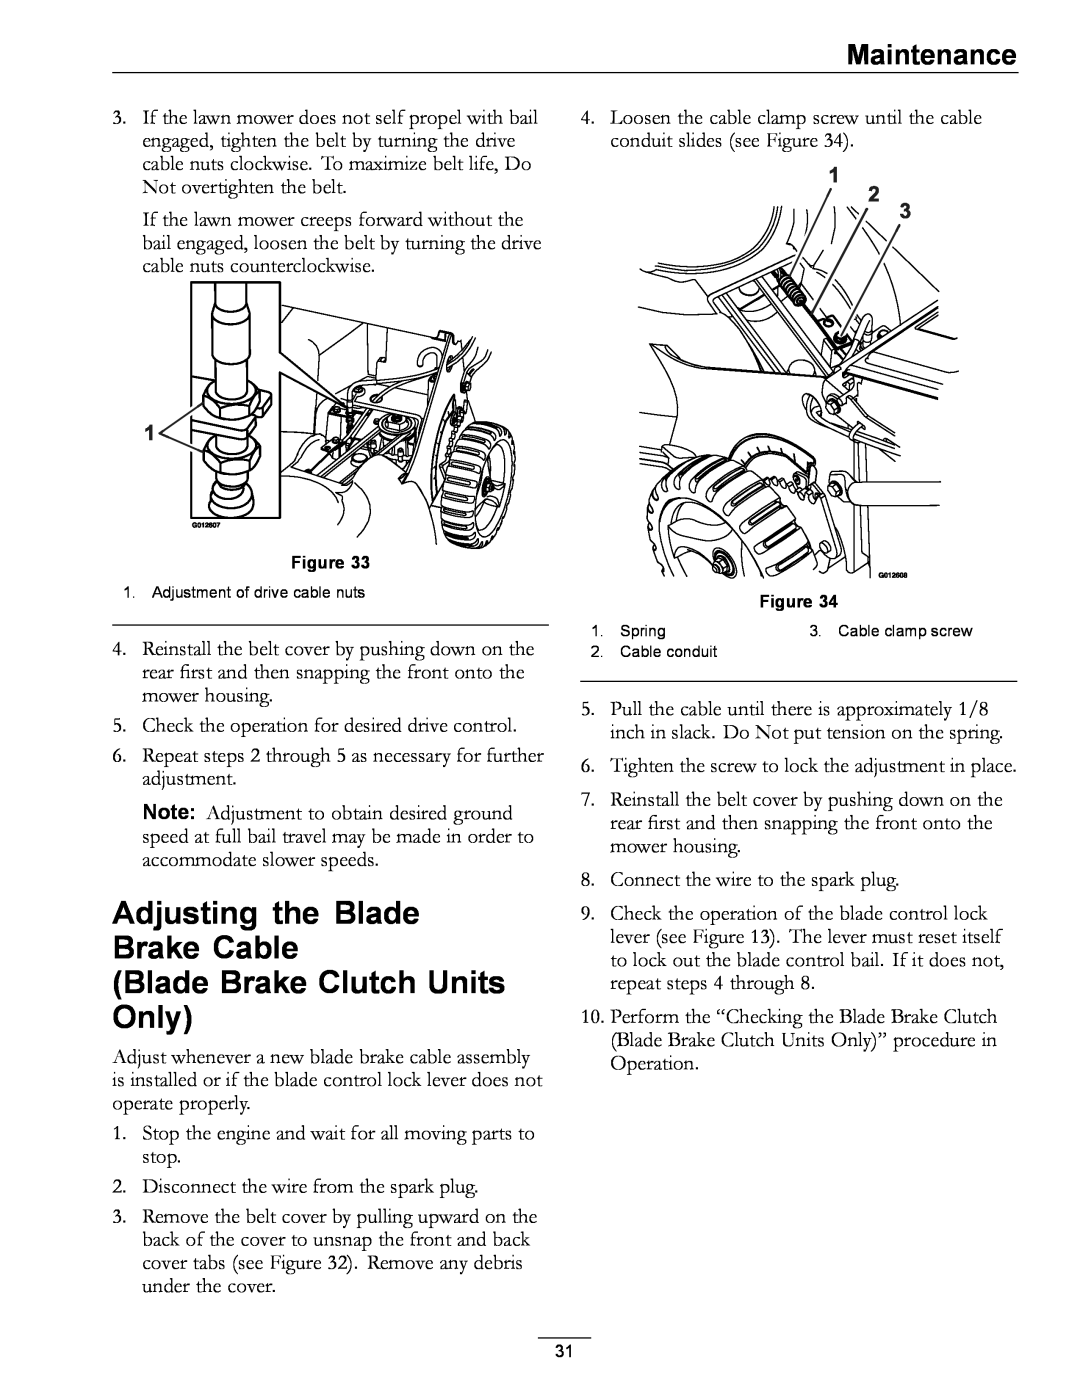 Exmark 4500-686 Rev. B manual Adjusting the Blade Brake Cable, Blade Brake Clutch Units Only, Maintenance 